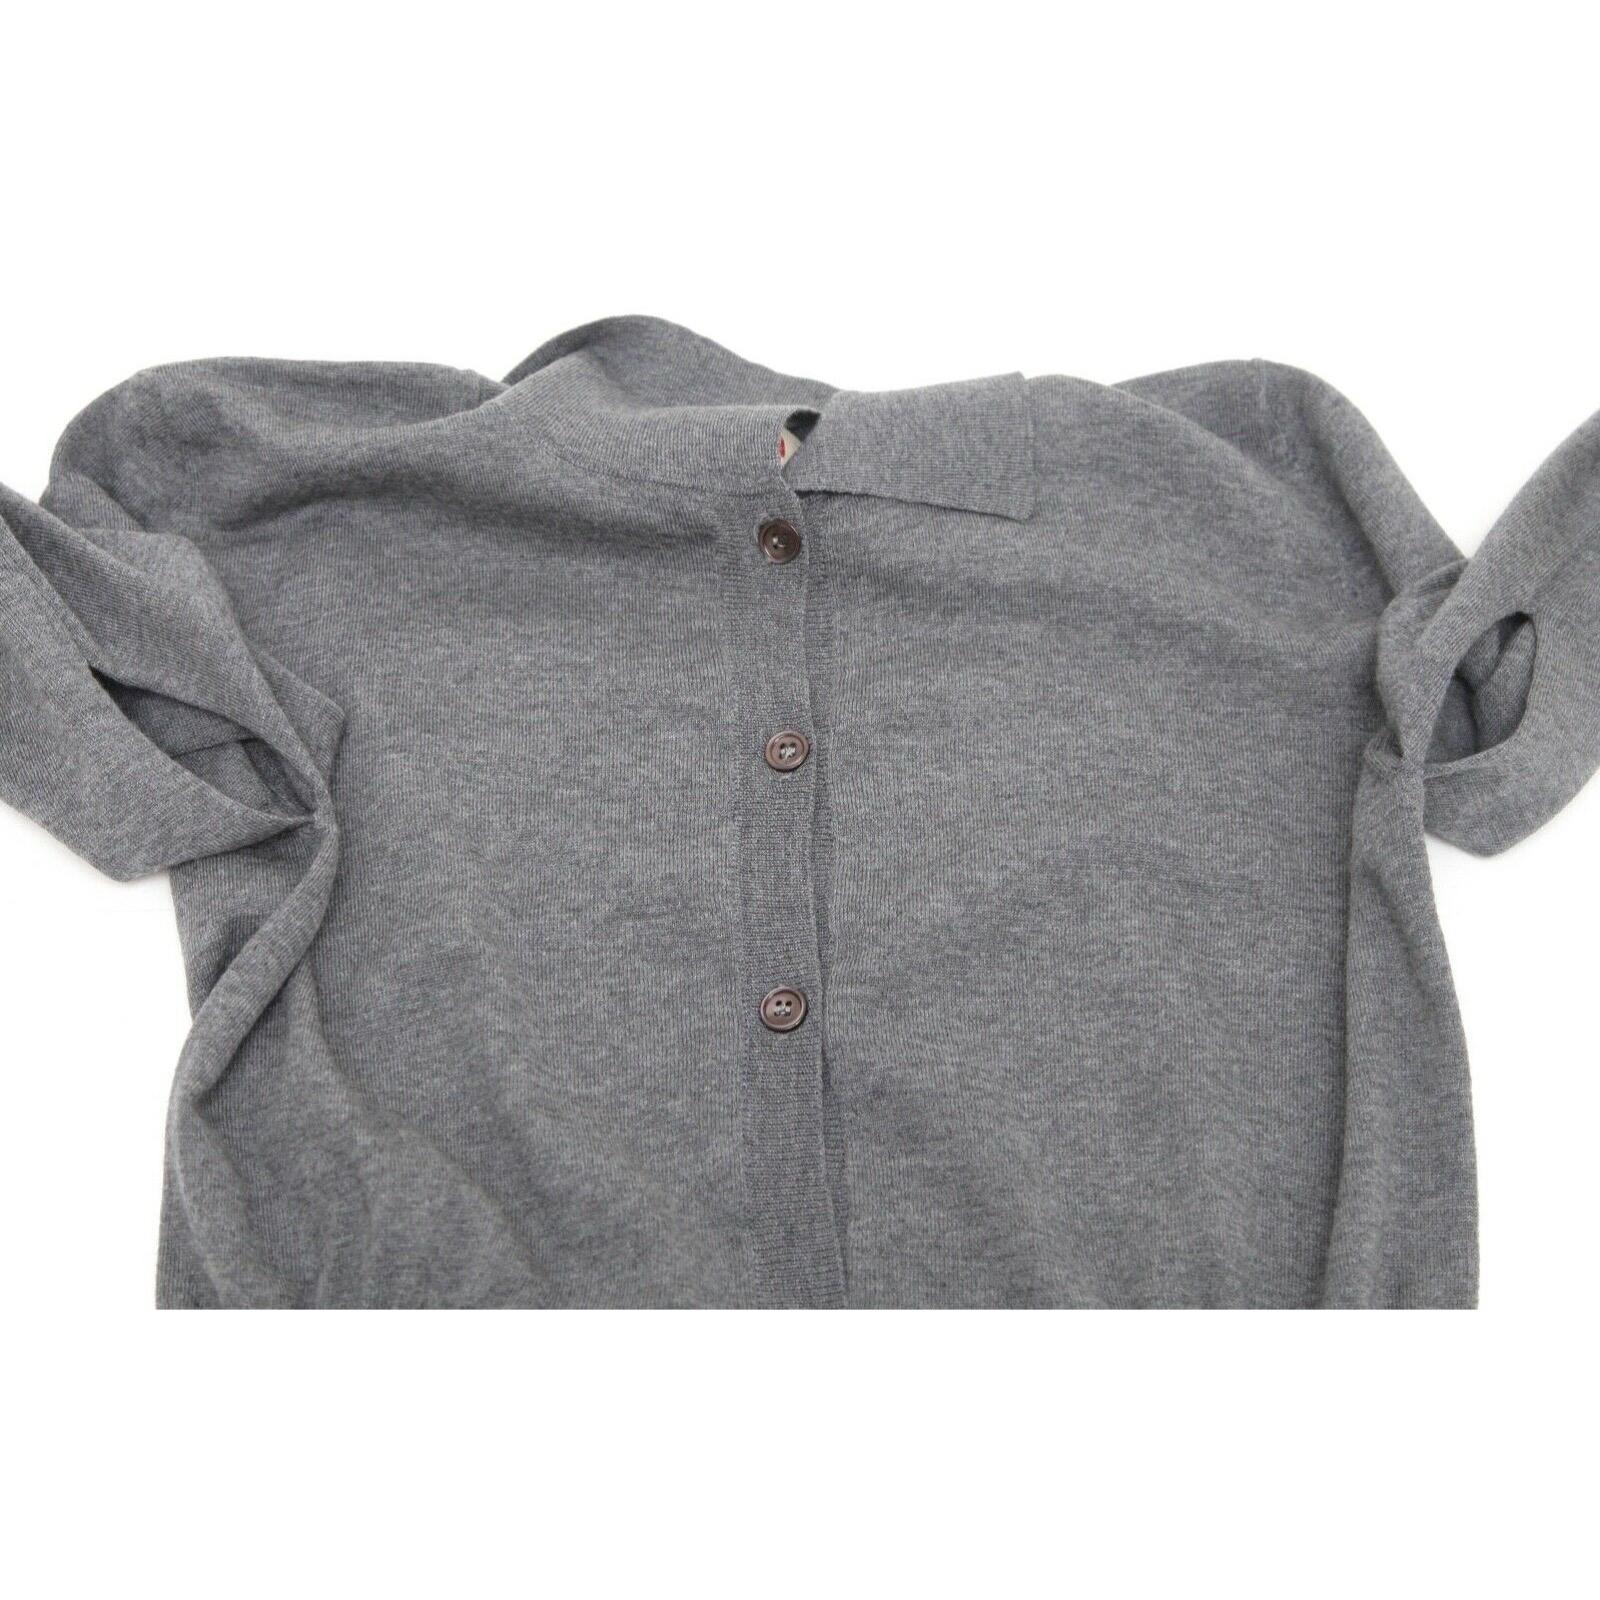 Women's MARNI Sweater Cardigan Knit Top Grey Wool Collar Long Sleeve Button 36